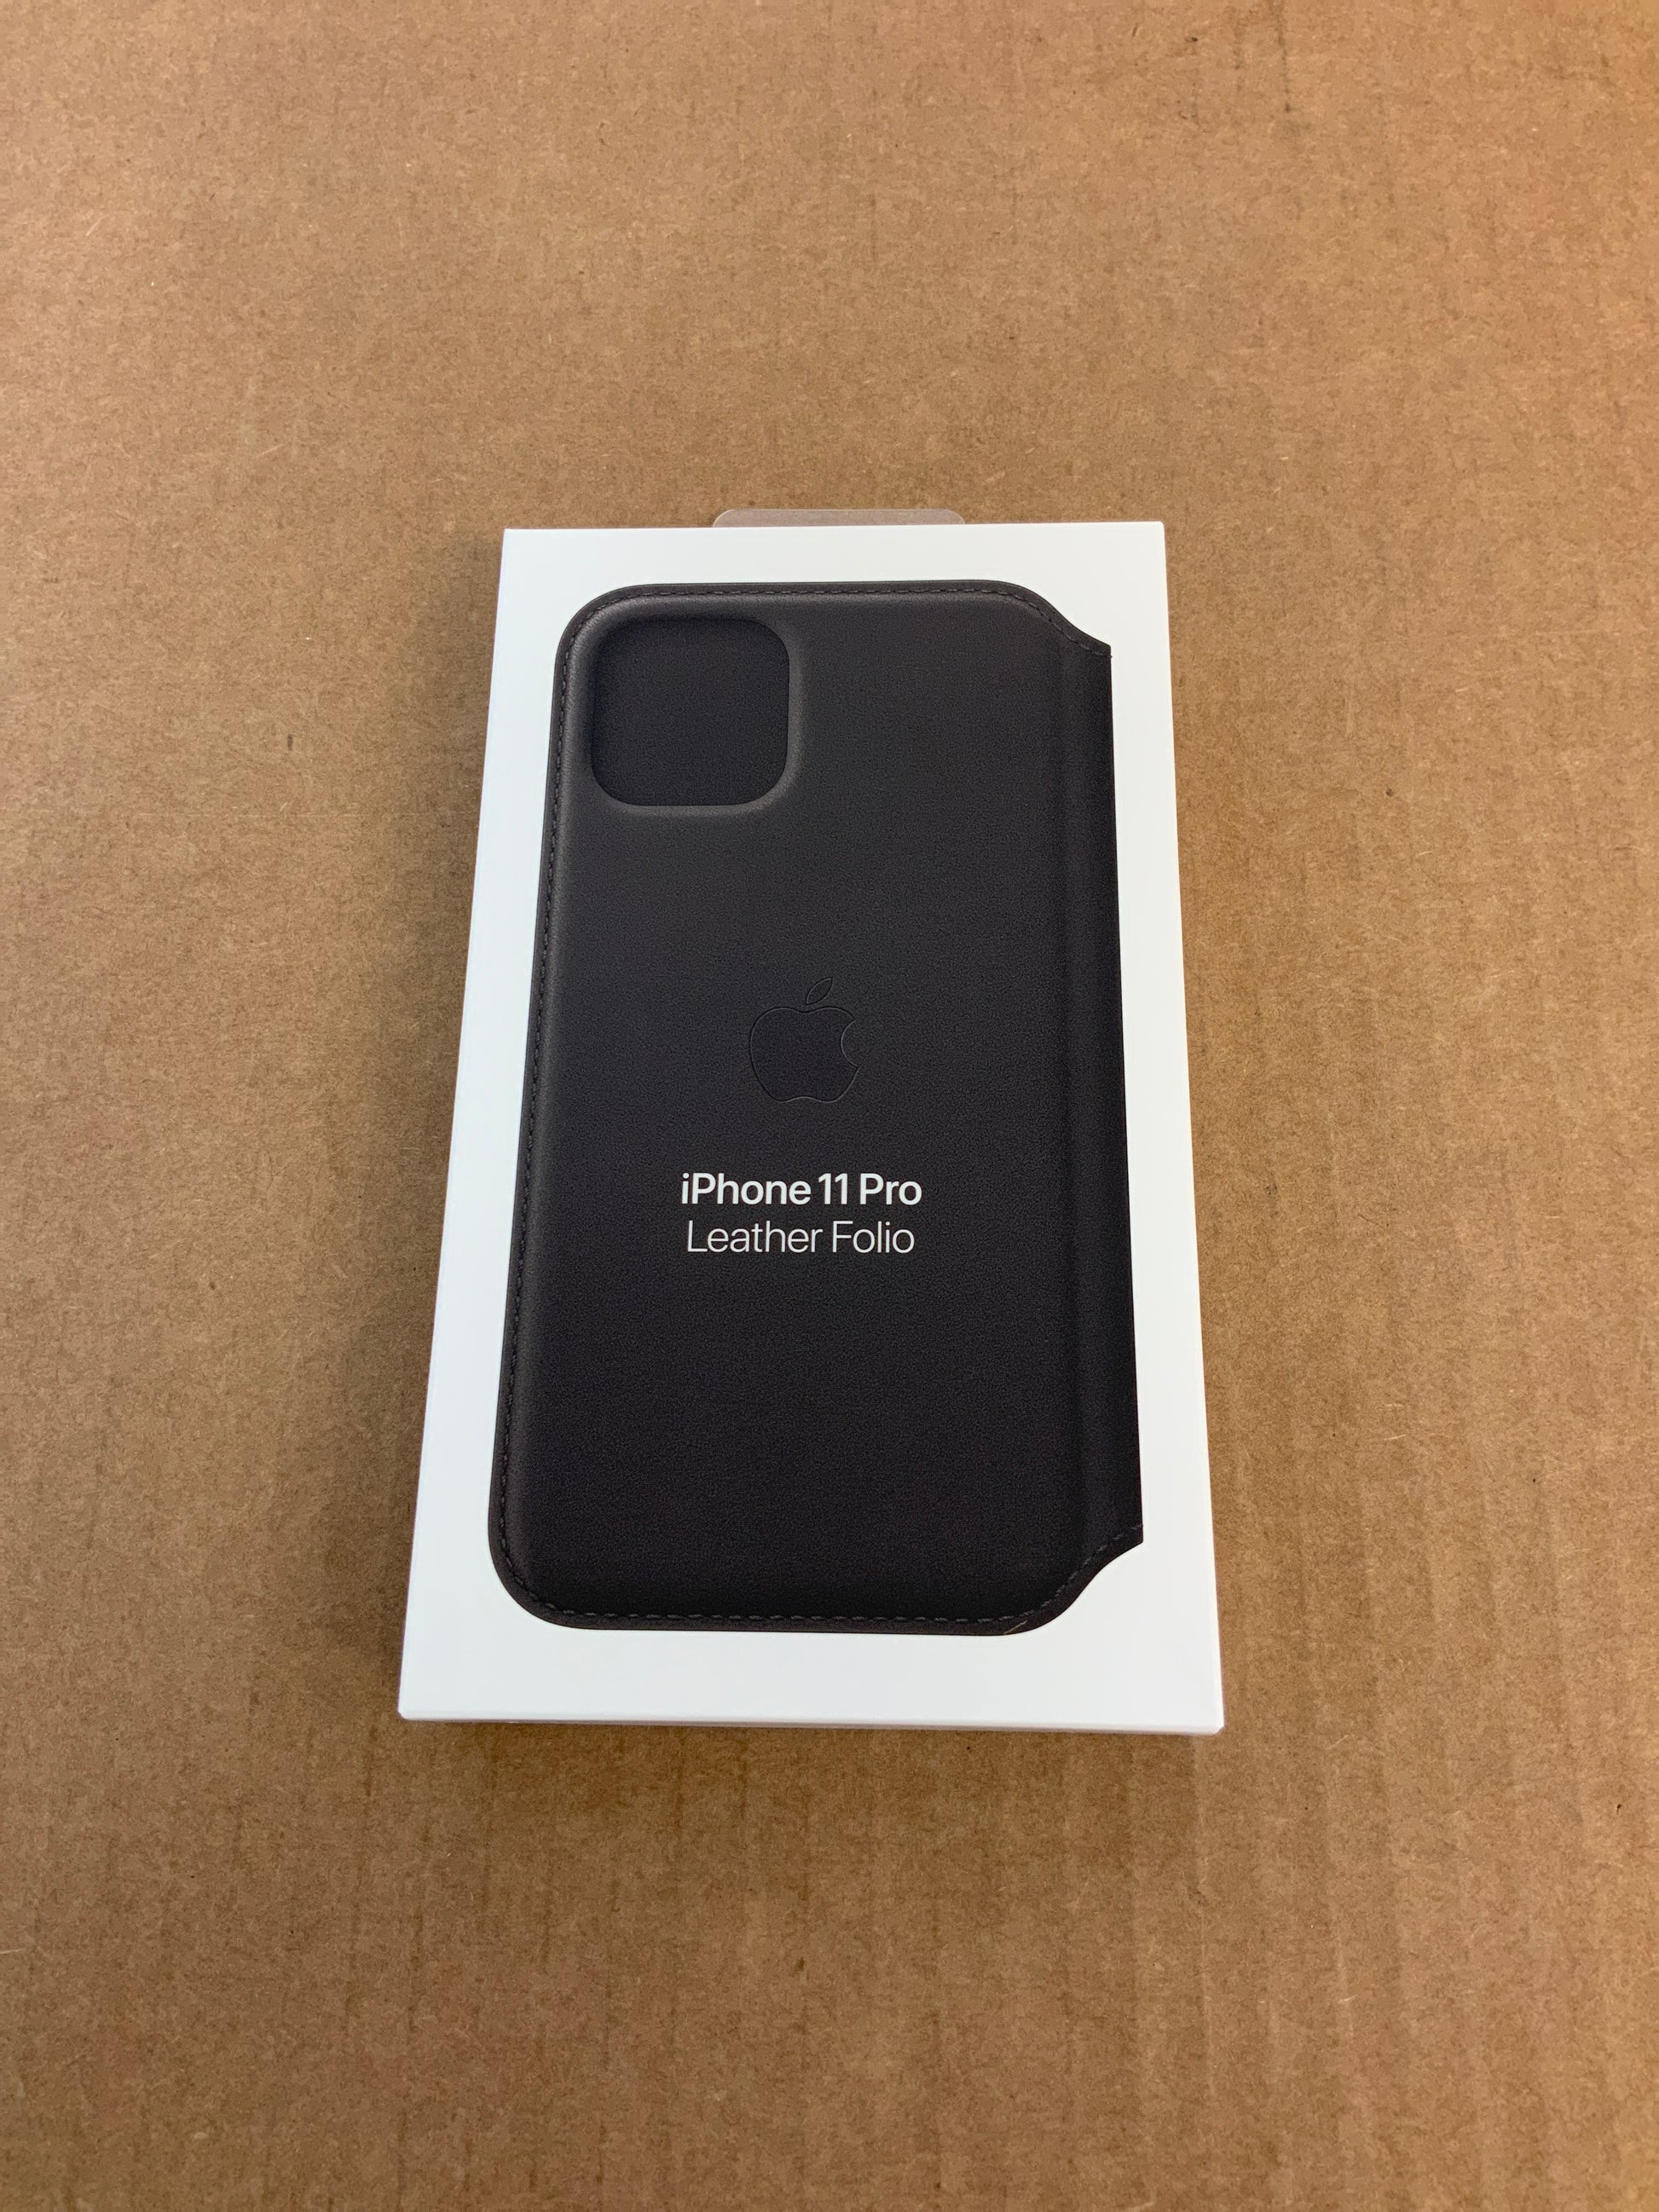  Apple iPhone 11 Pro Leather Folio Case - Black